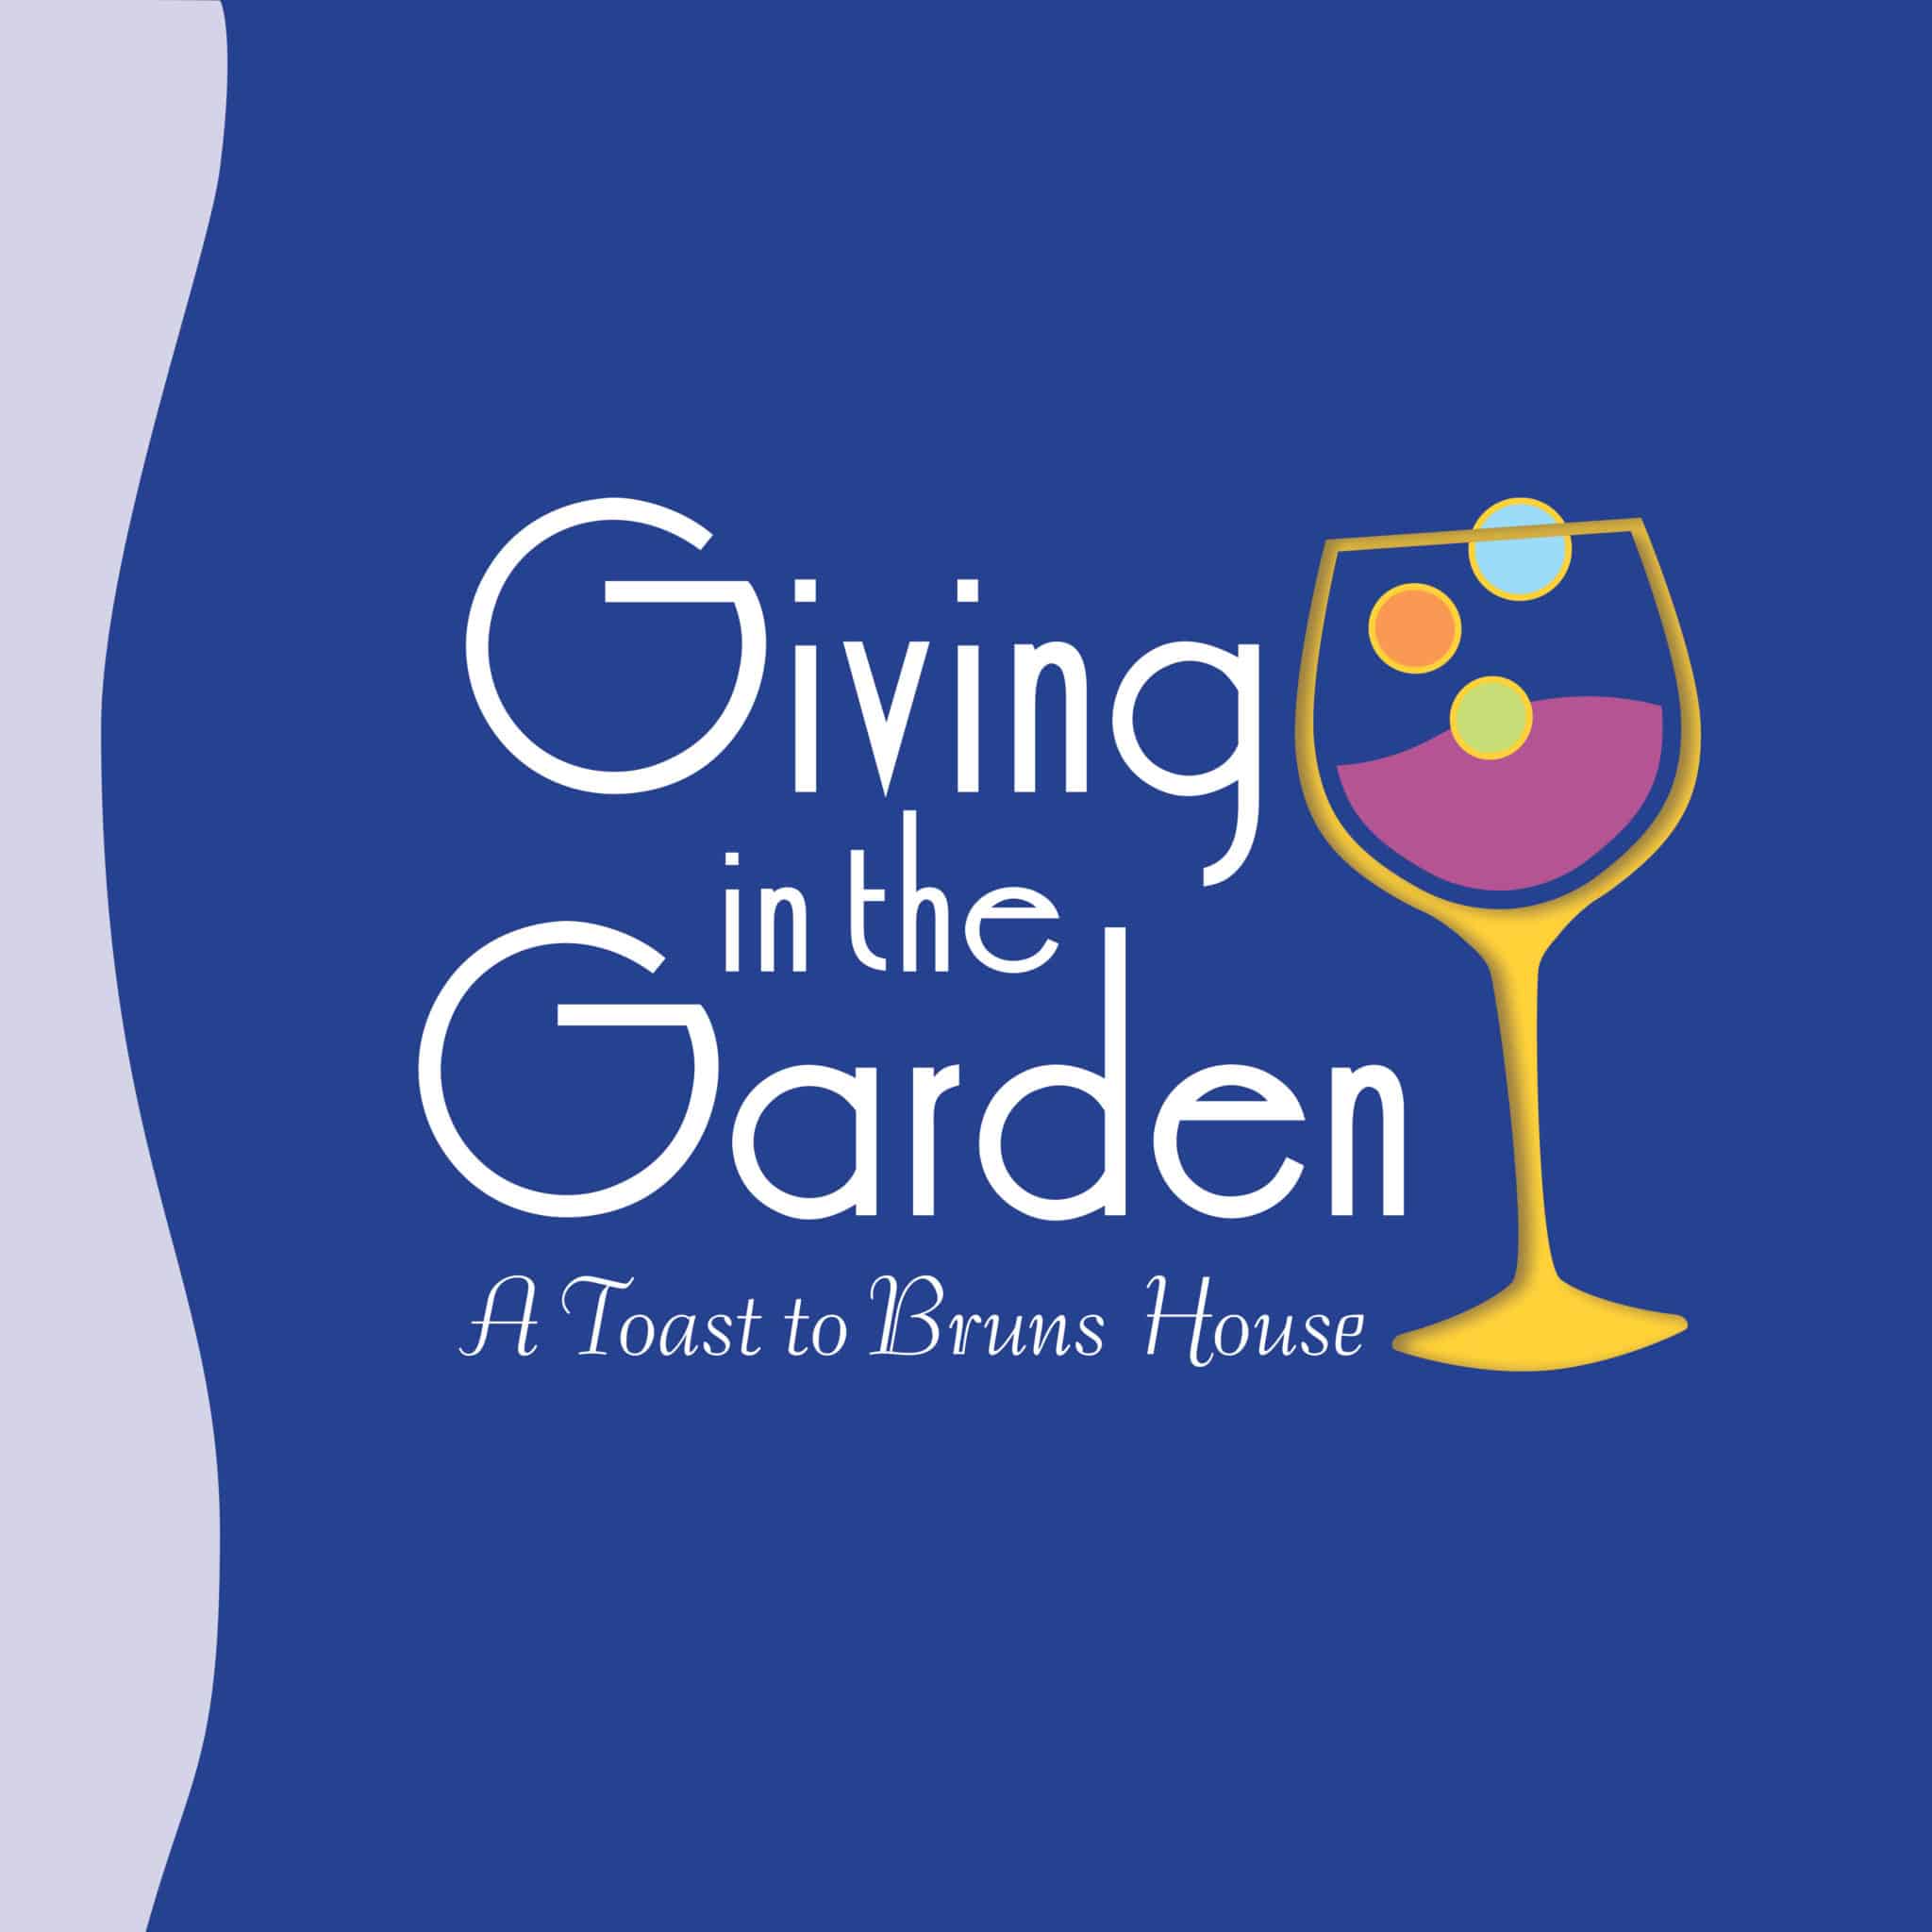 Giving in the Garden